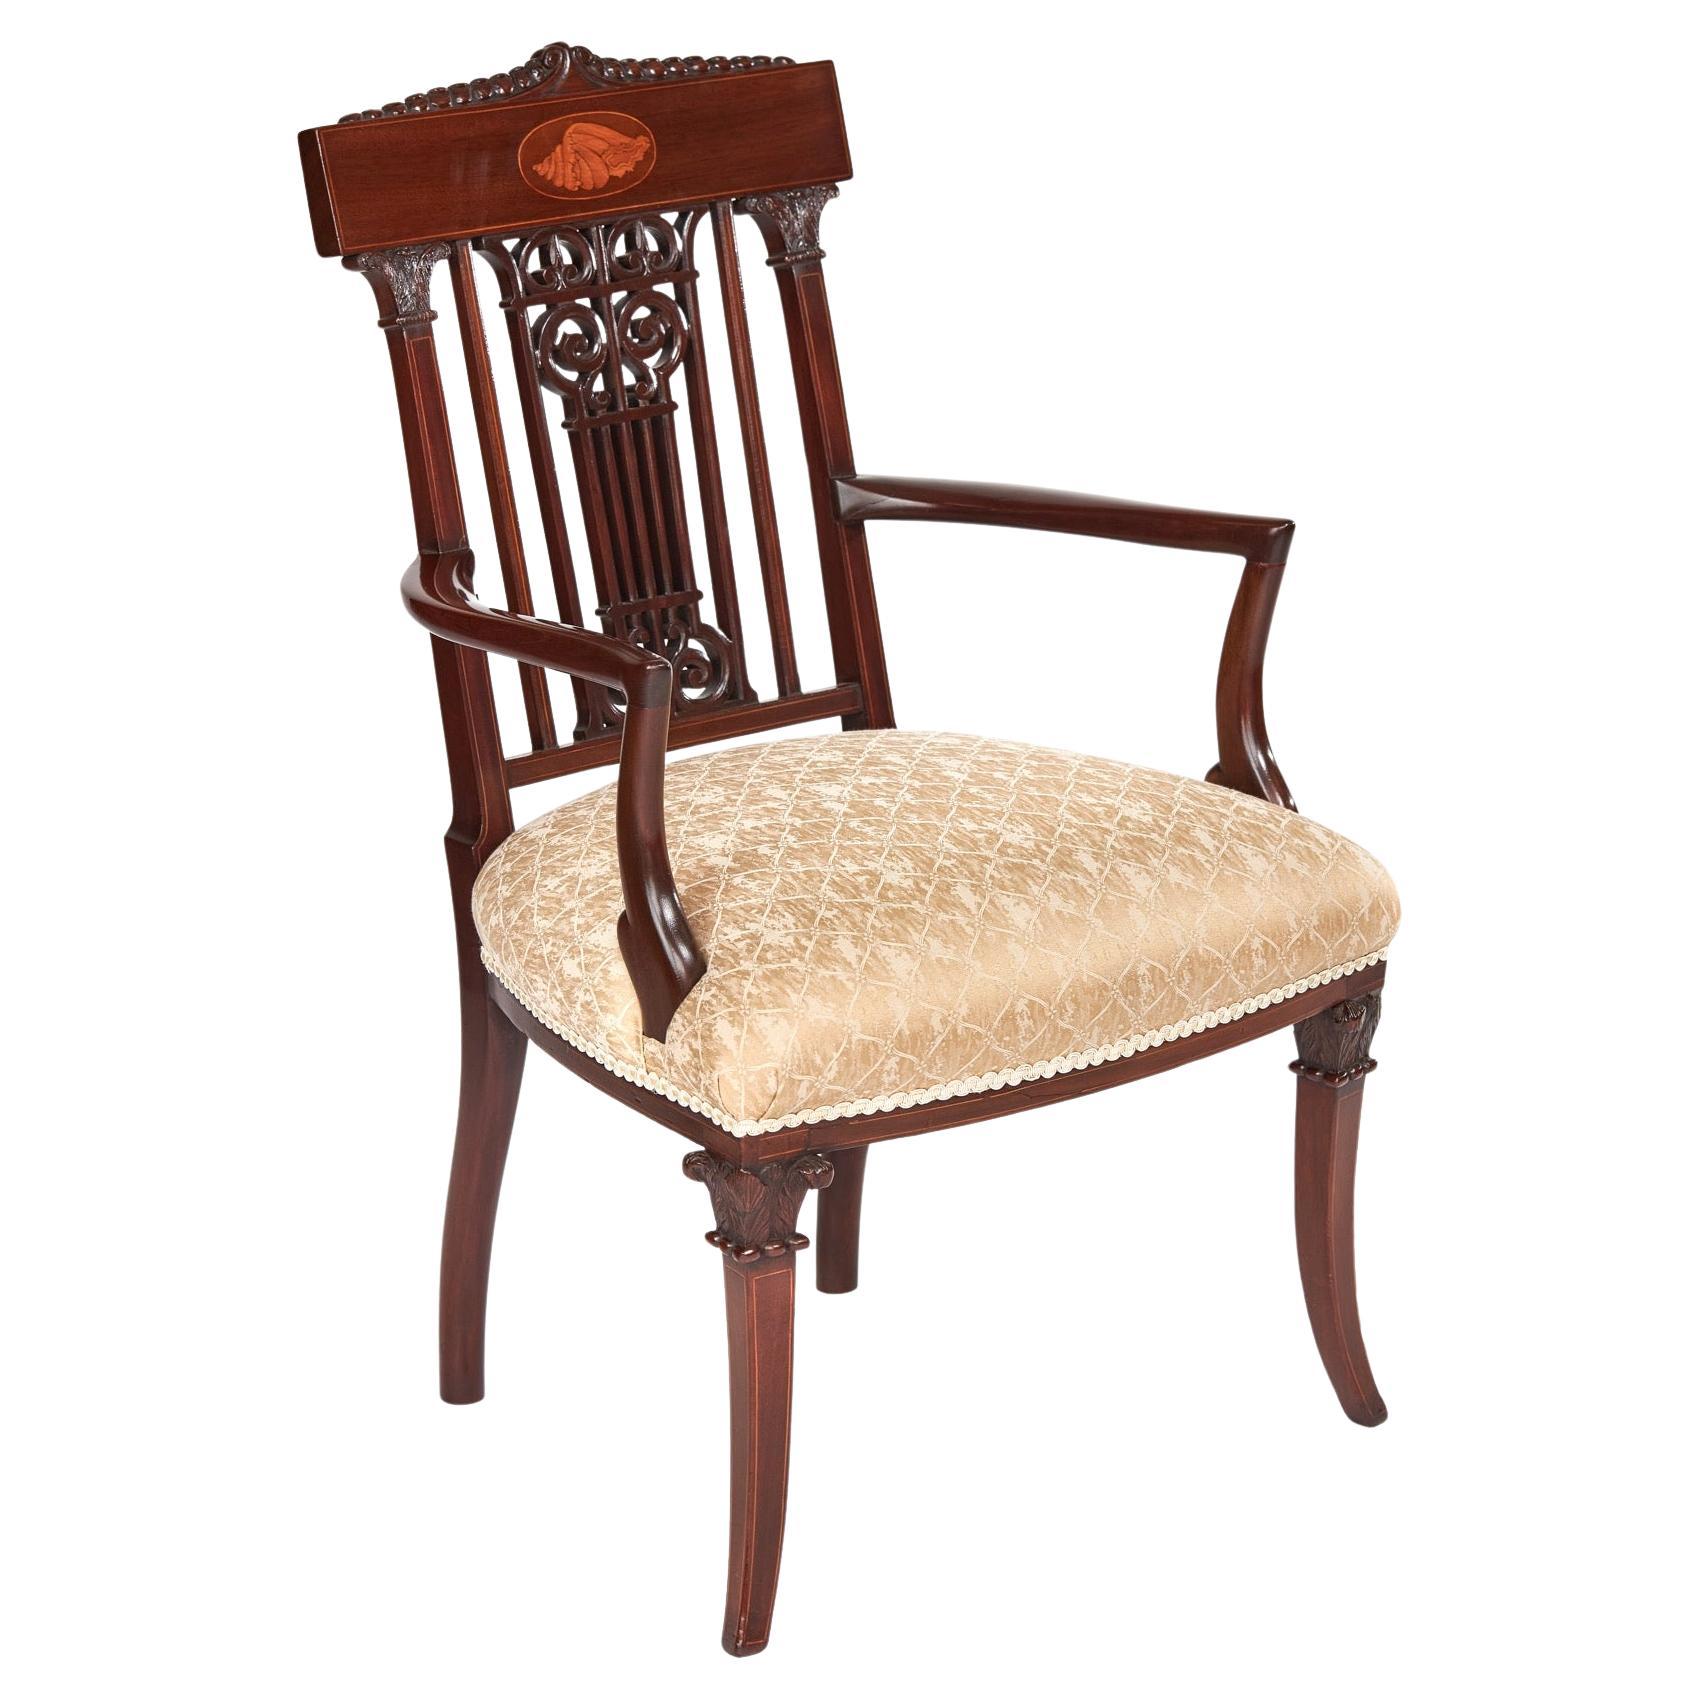 Feiner Sheraton Revival-Stuhl mit Mahagoni-Intarsien und geschnitztem Elbow-Sessel